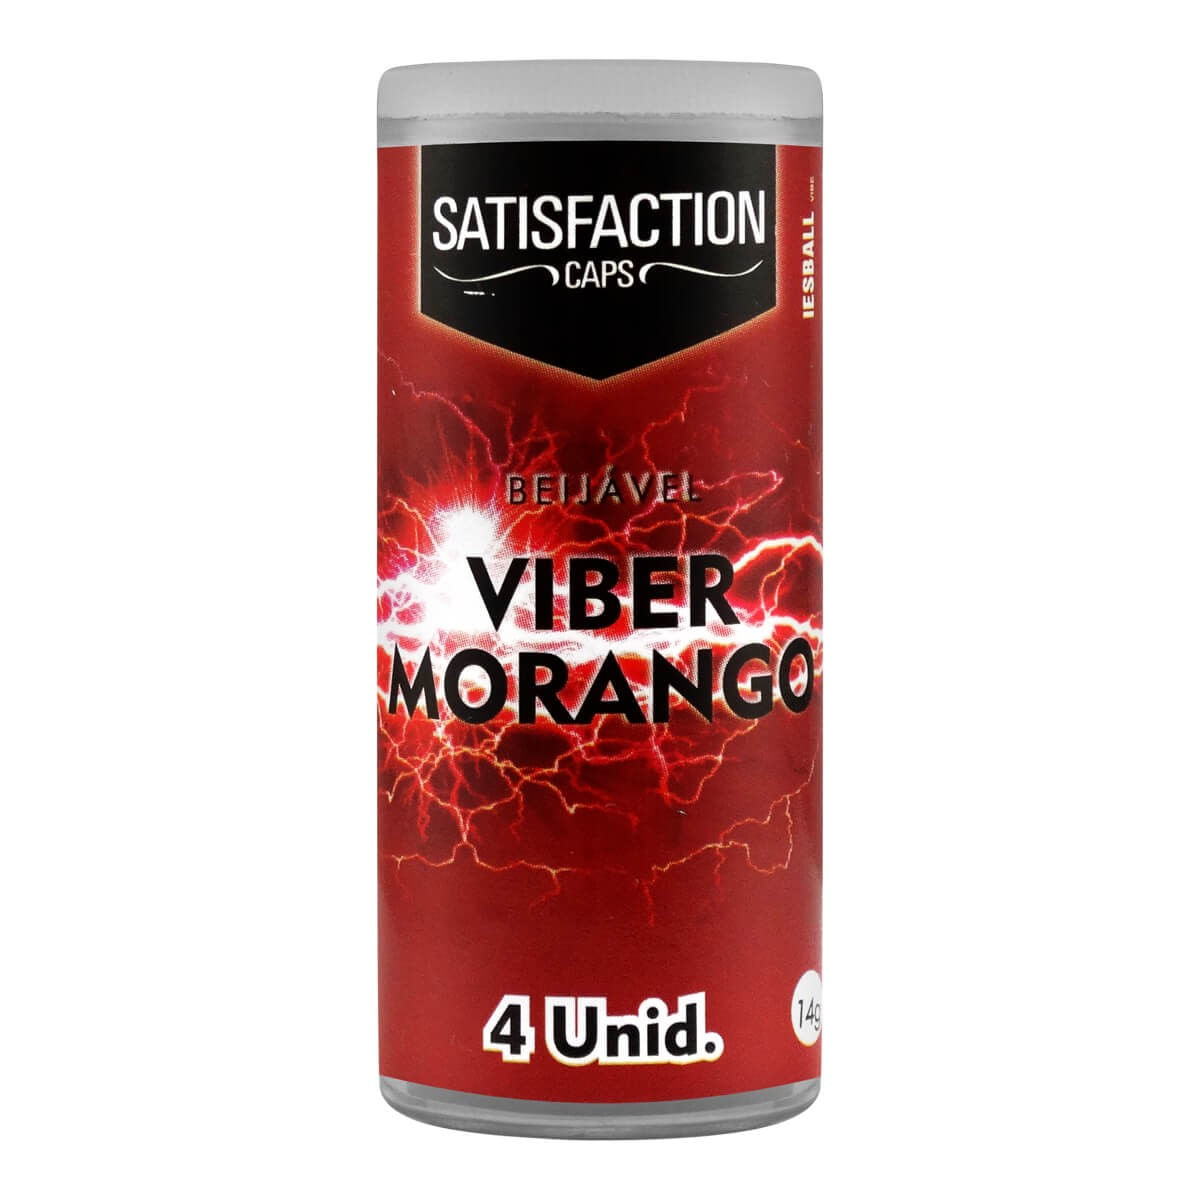 Iesball Viber Morango Cápsulas para Massagem Corporal Satisfaction Caps